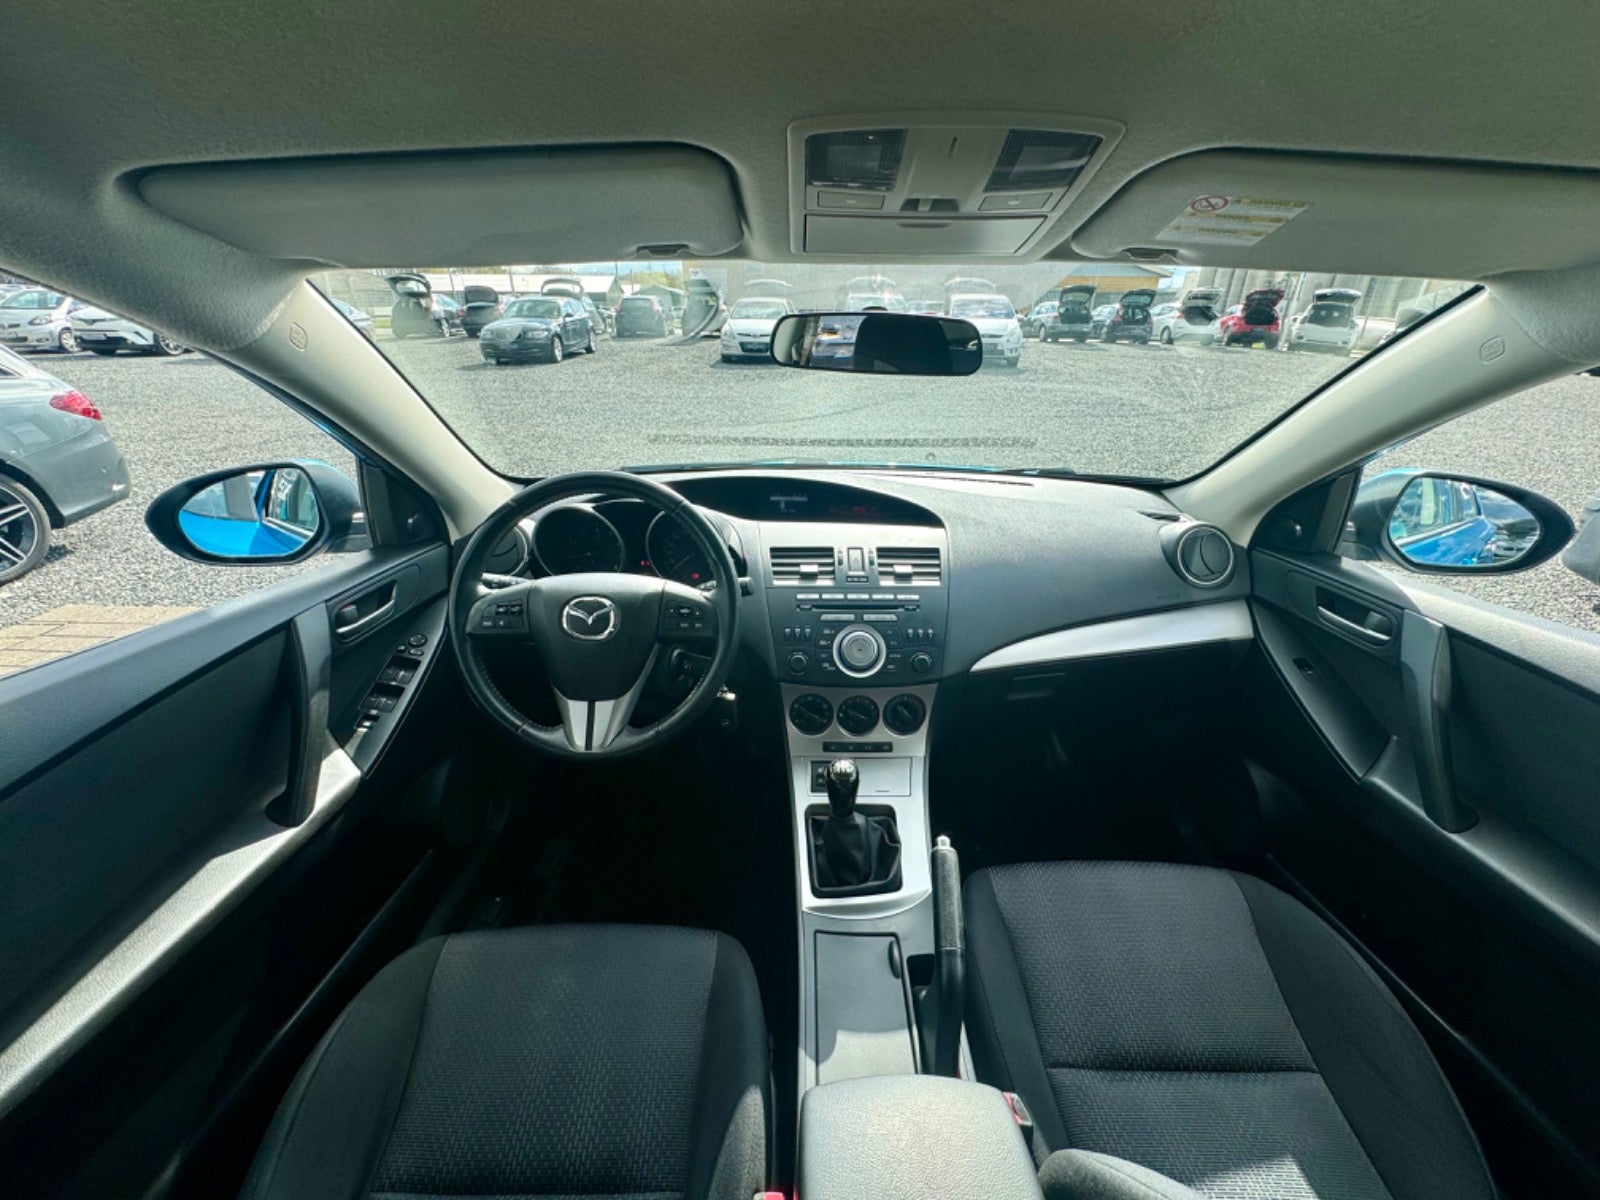 Mazda 3 1,6 Advance Benzin modelår 2009 km 167000 ABS airbag